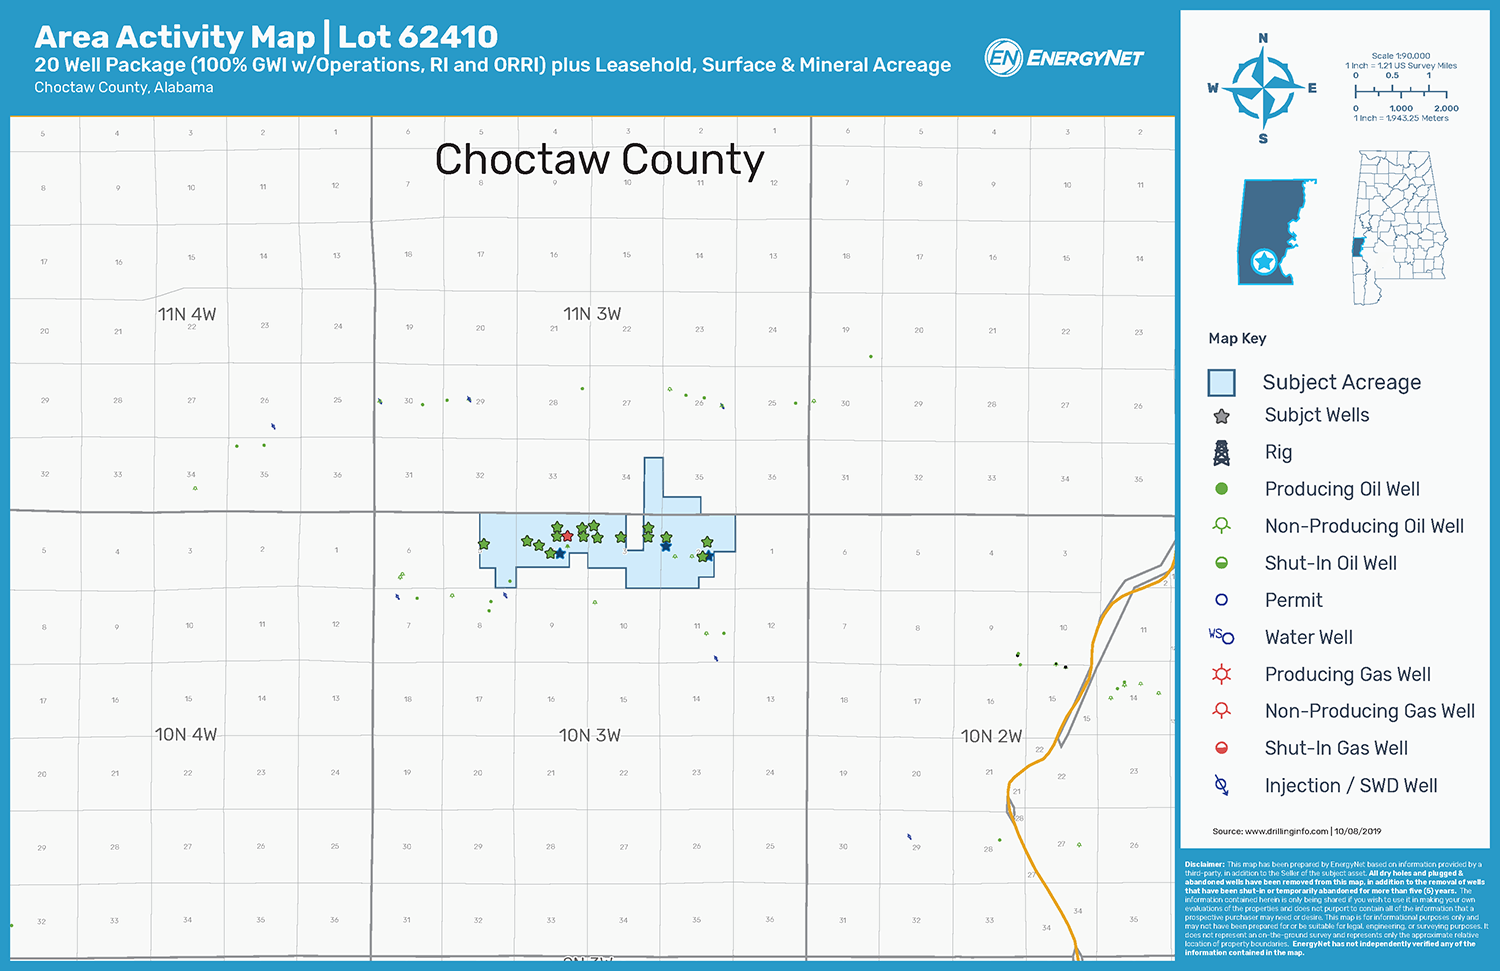 Block T Operating Alabama Asset Map, Choctaw County (Source: EnergyNet)